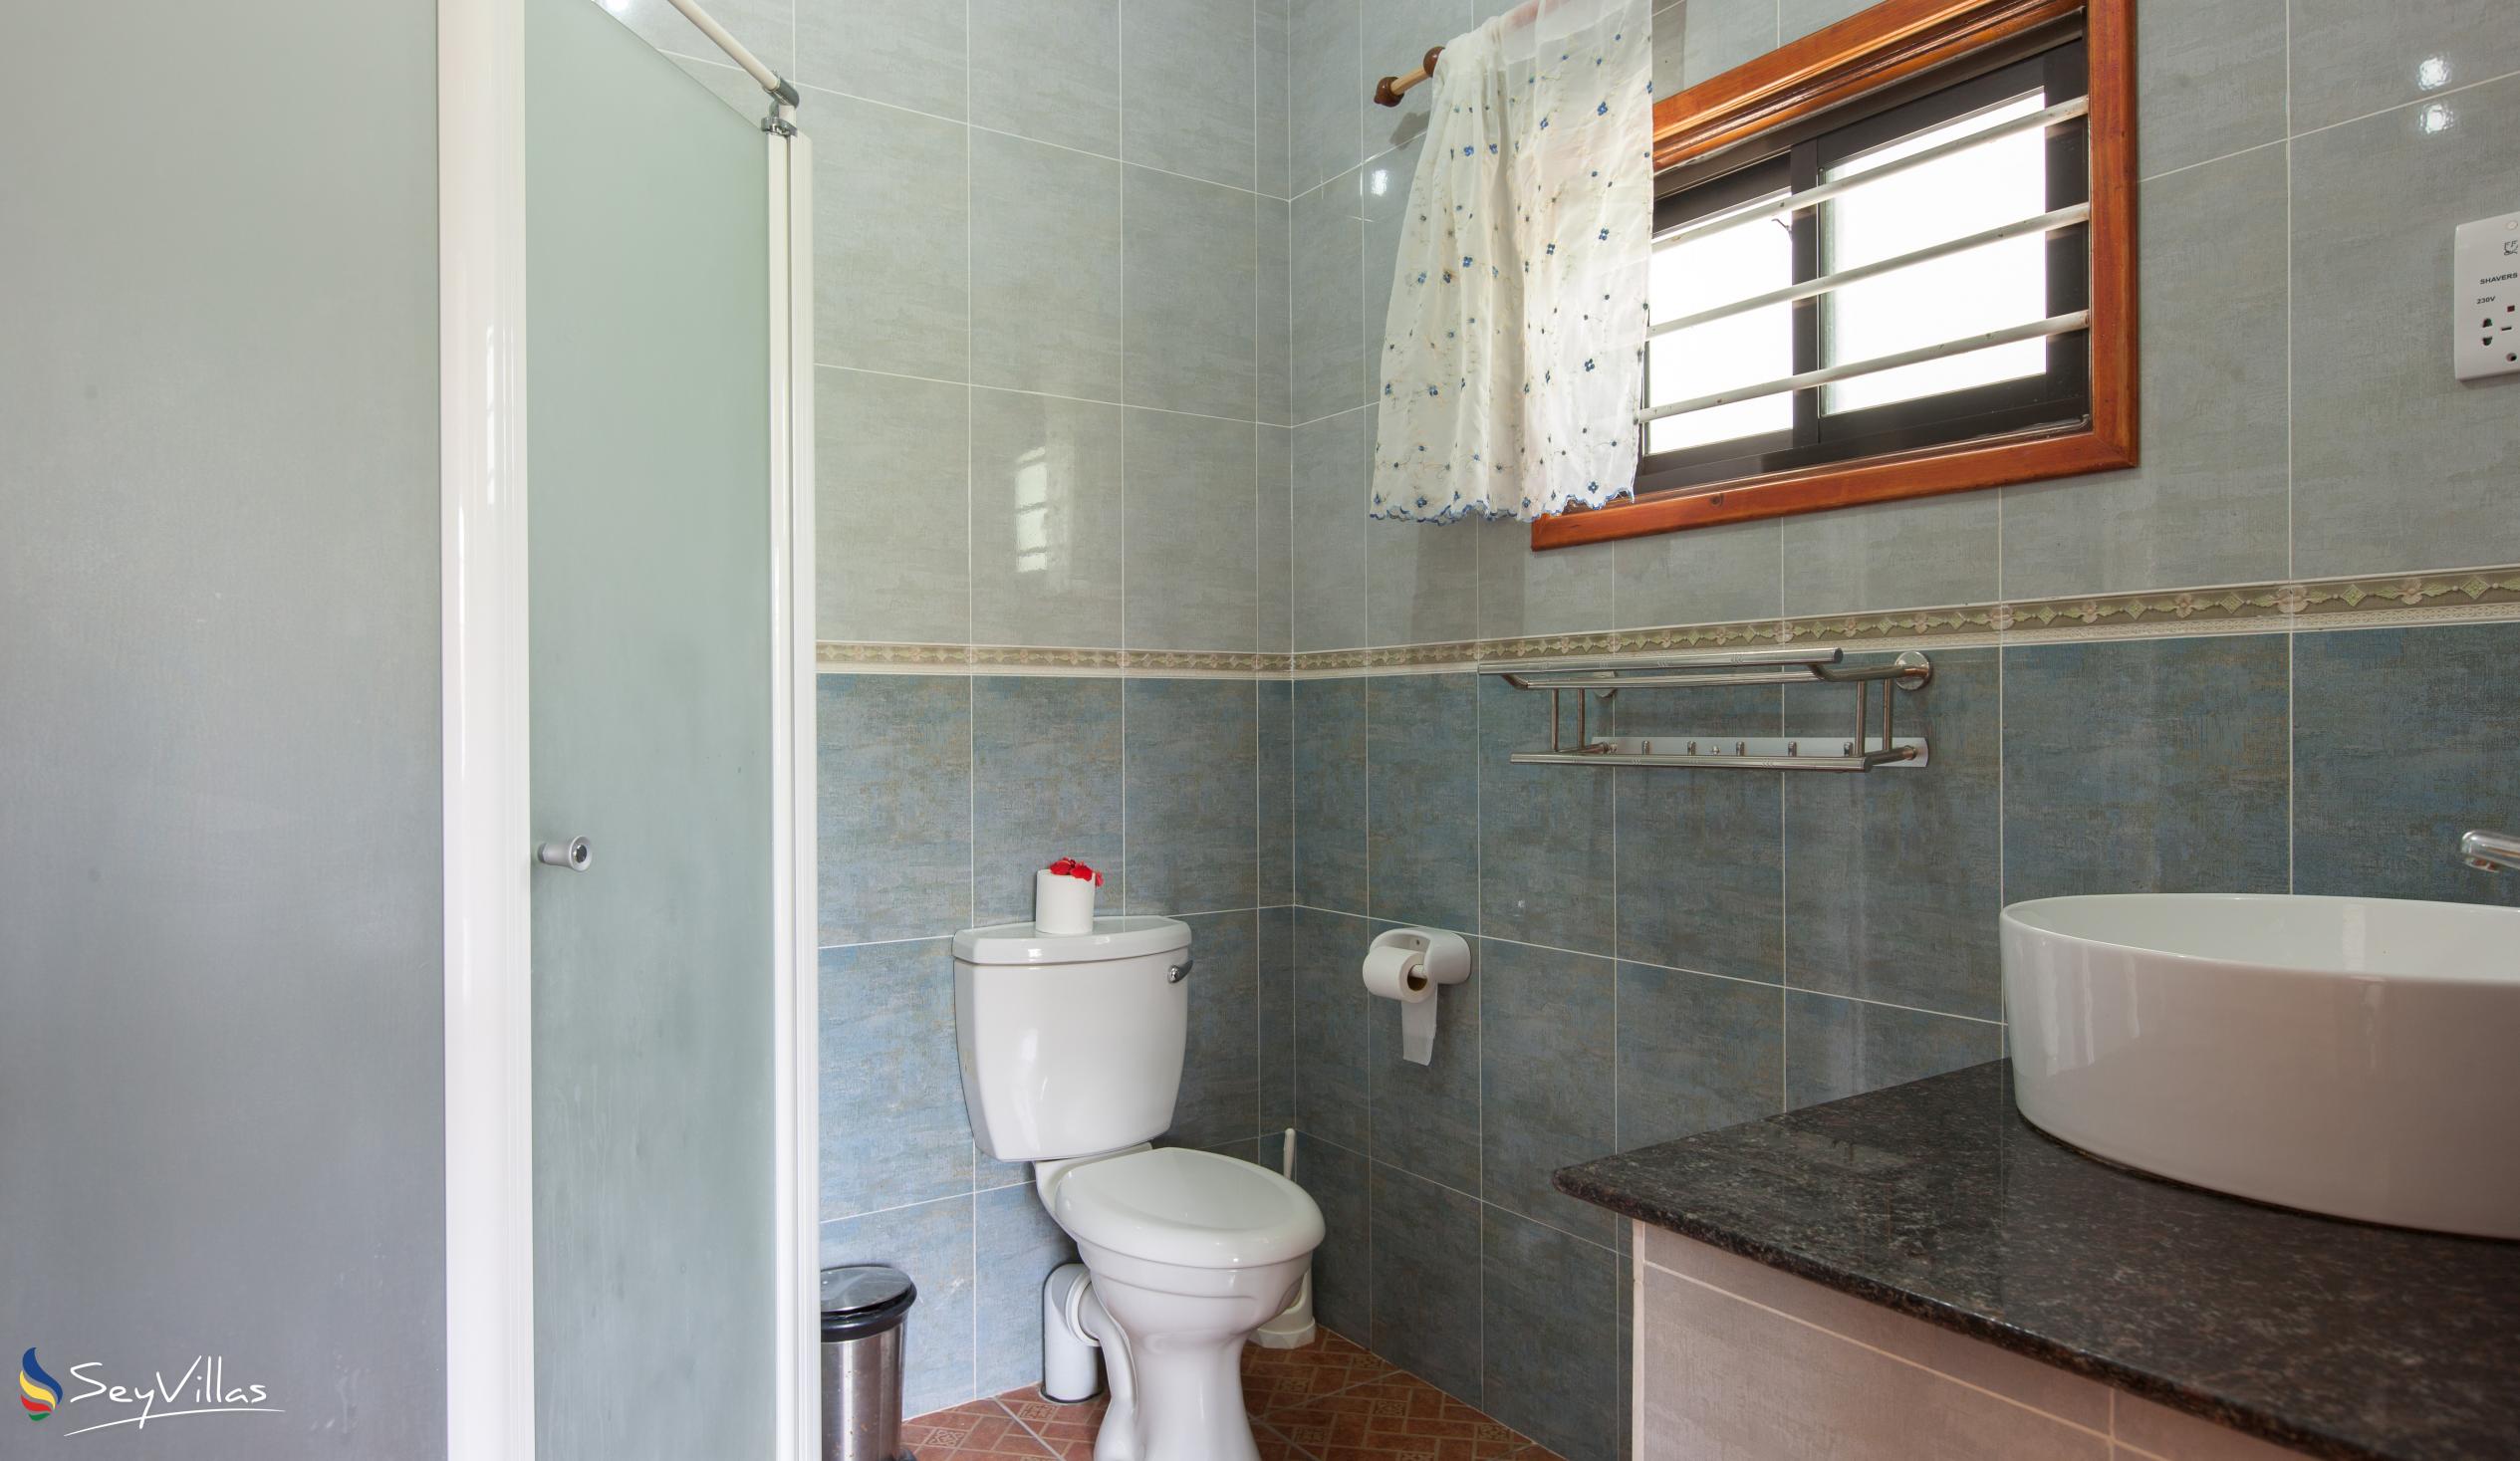 Foto 36: Zerof Self Catering  Apartments - Bungalow mit 2 Schlafzimmern - La Digue (Seychellen)